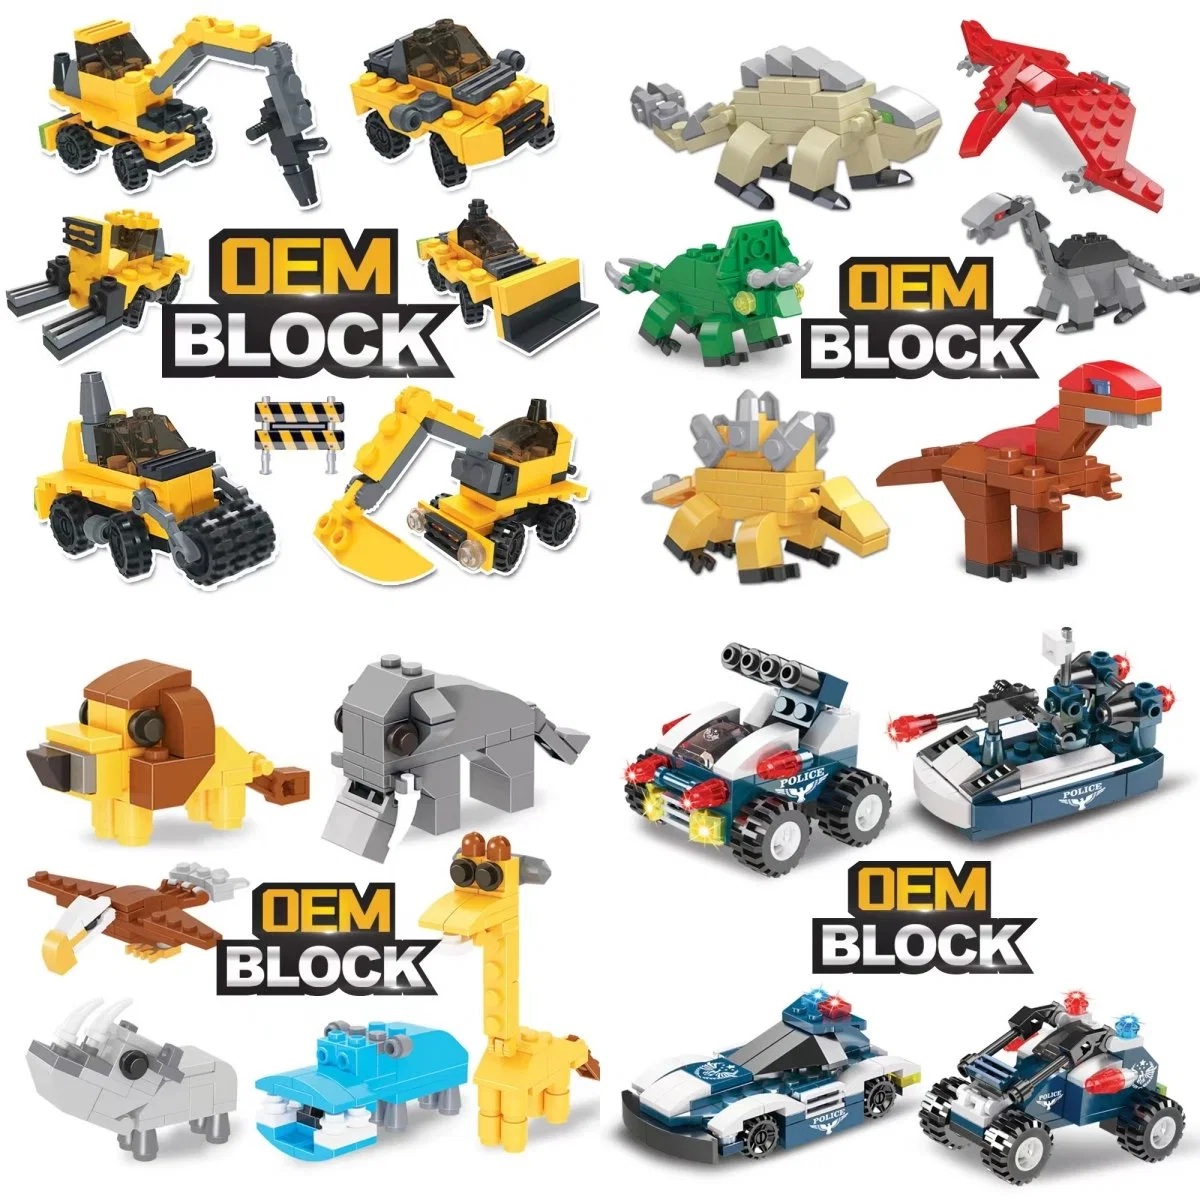 Factory Direct Sales Wholesale Intellectual Educational Toys Kids Toy Educational Toys Children Plastic DIY OEM/ODM Block Brick